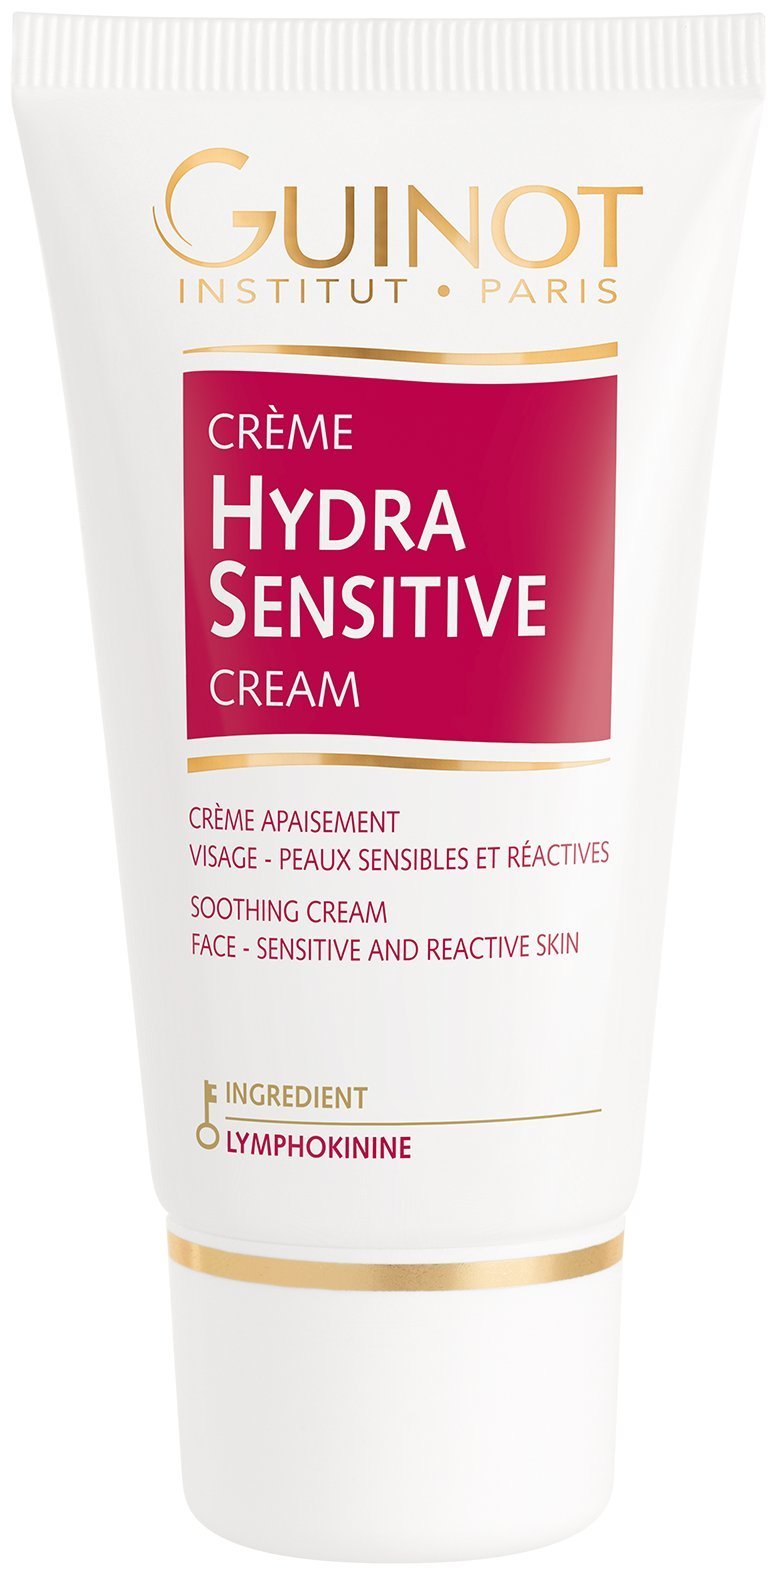 [Australia] - Guinot Creme Hydra Sensitive Facial Cream, 1.7 oz 